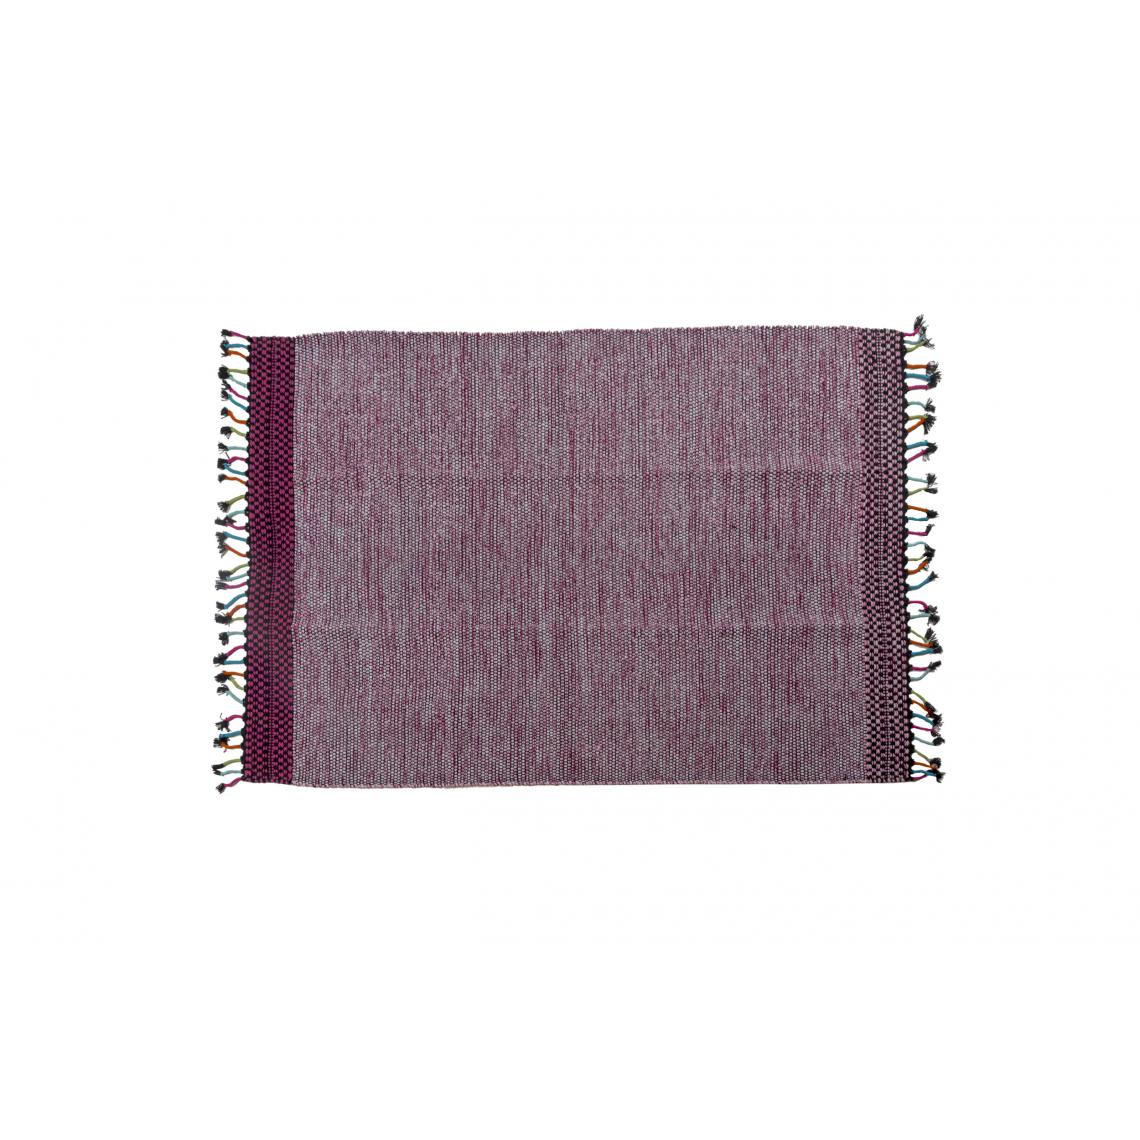 Alter - Tapis moderne Dallas, style kilim, 100% coton, rose, 110x60cm - Tapis